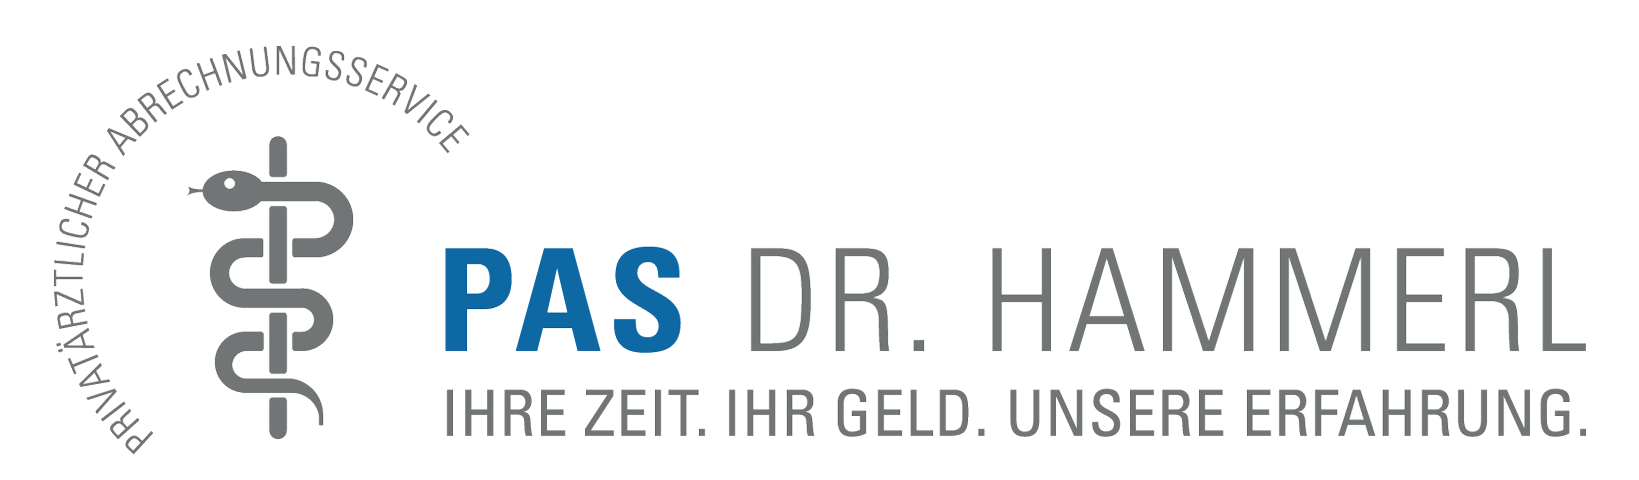 PAS DR. Hammerl Logo